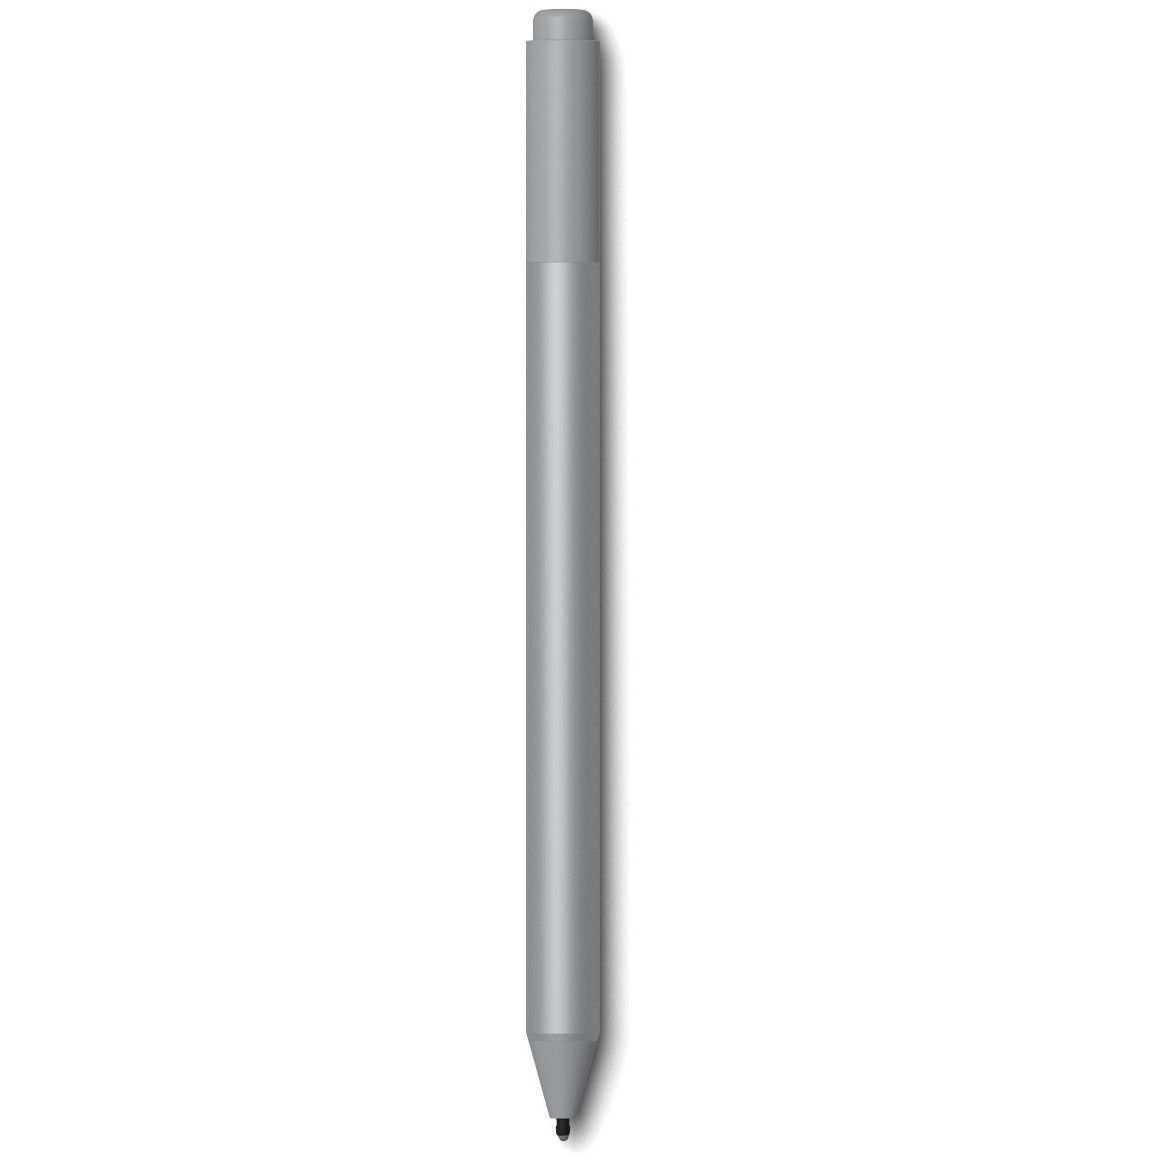 Microsoft Surface Pen stylus pen - EYV-00010